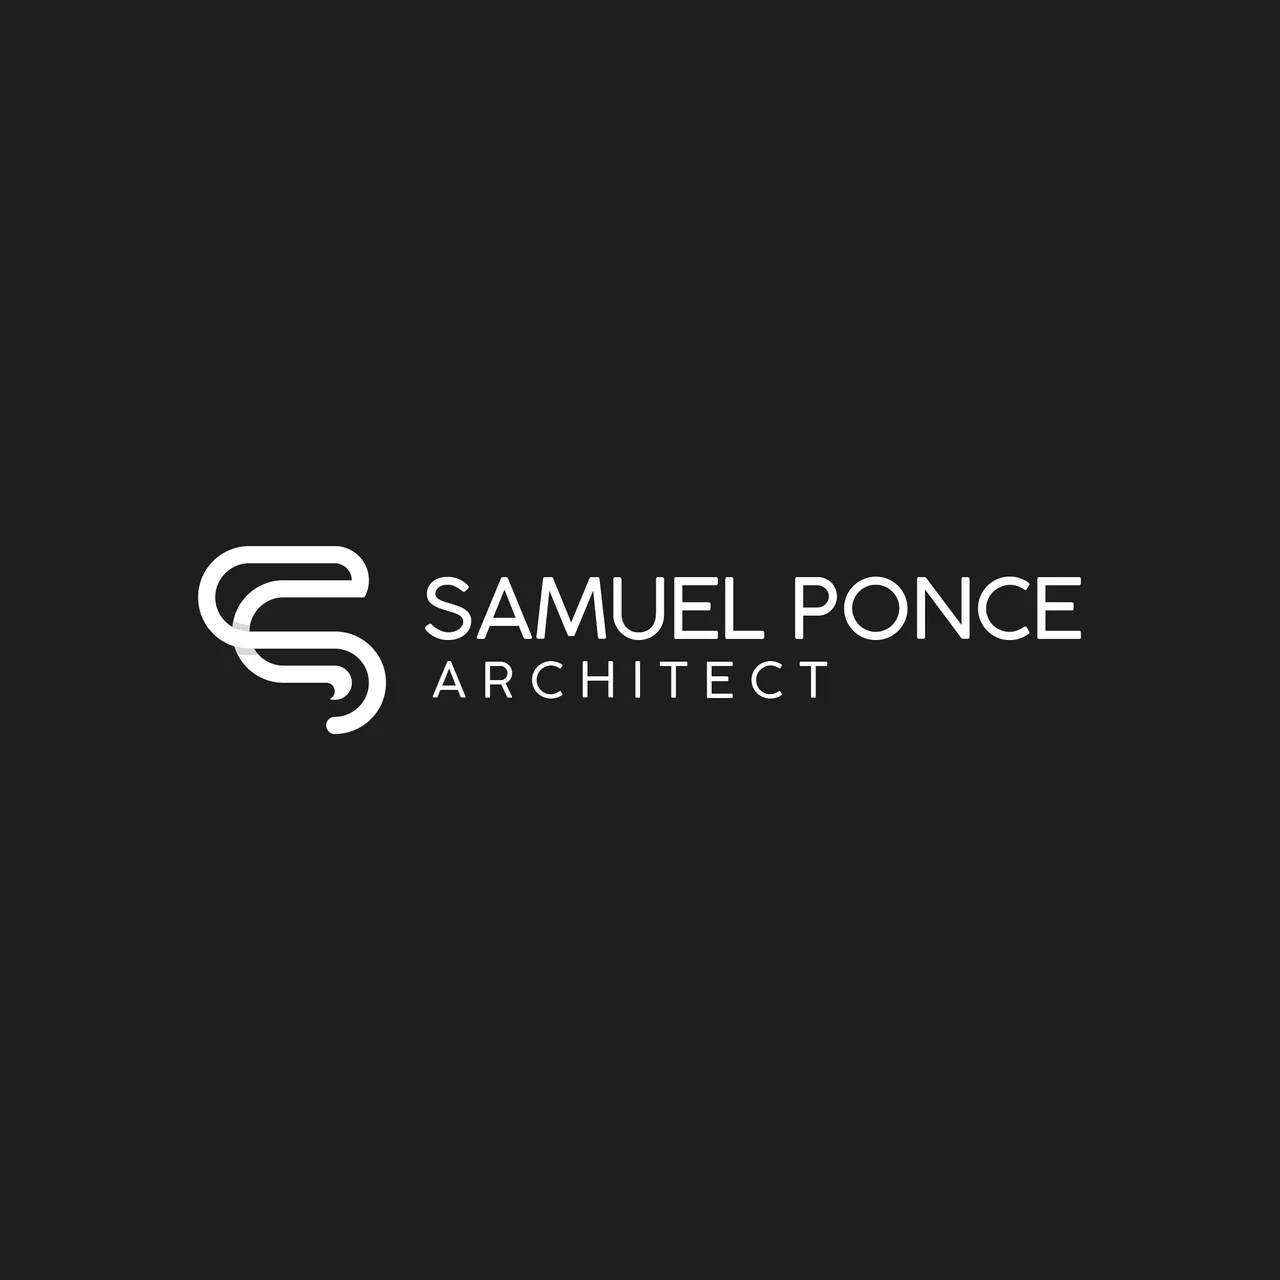 Samuel Ponce Architect.jpg